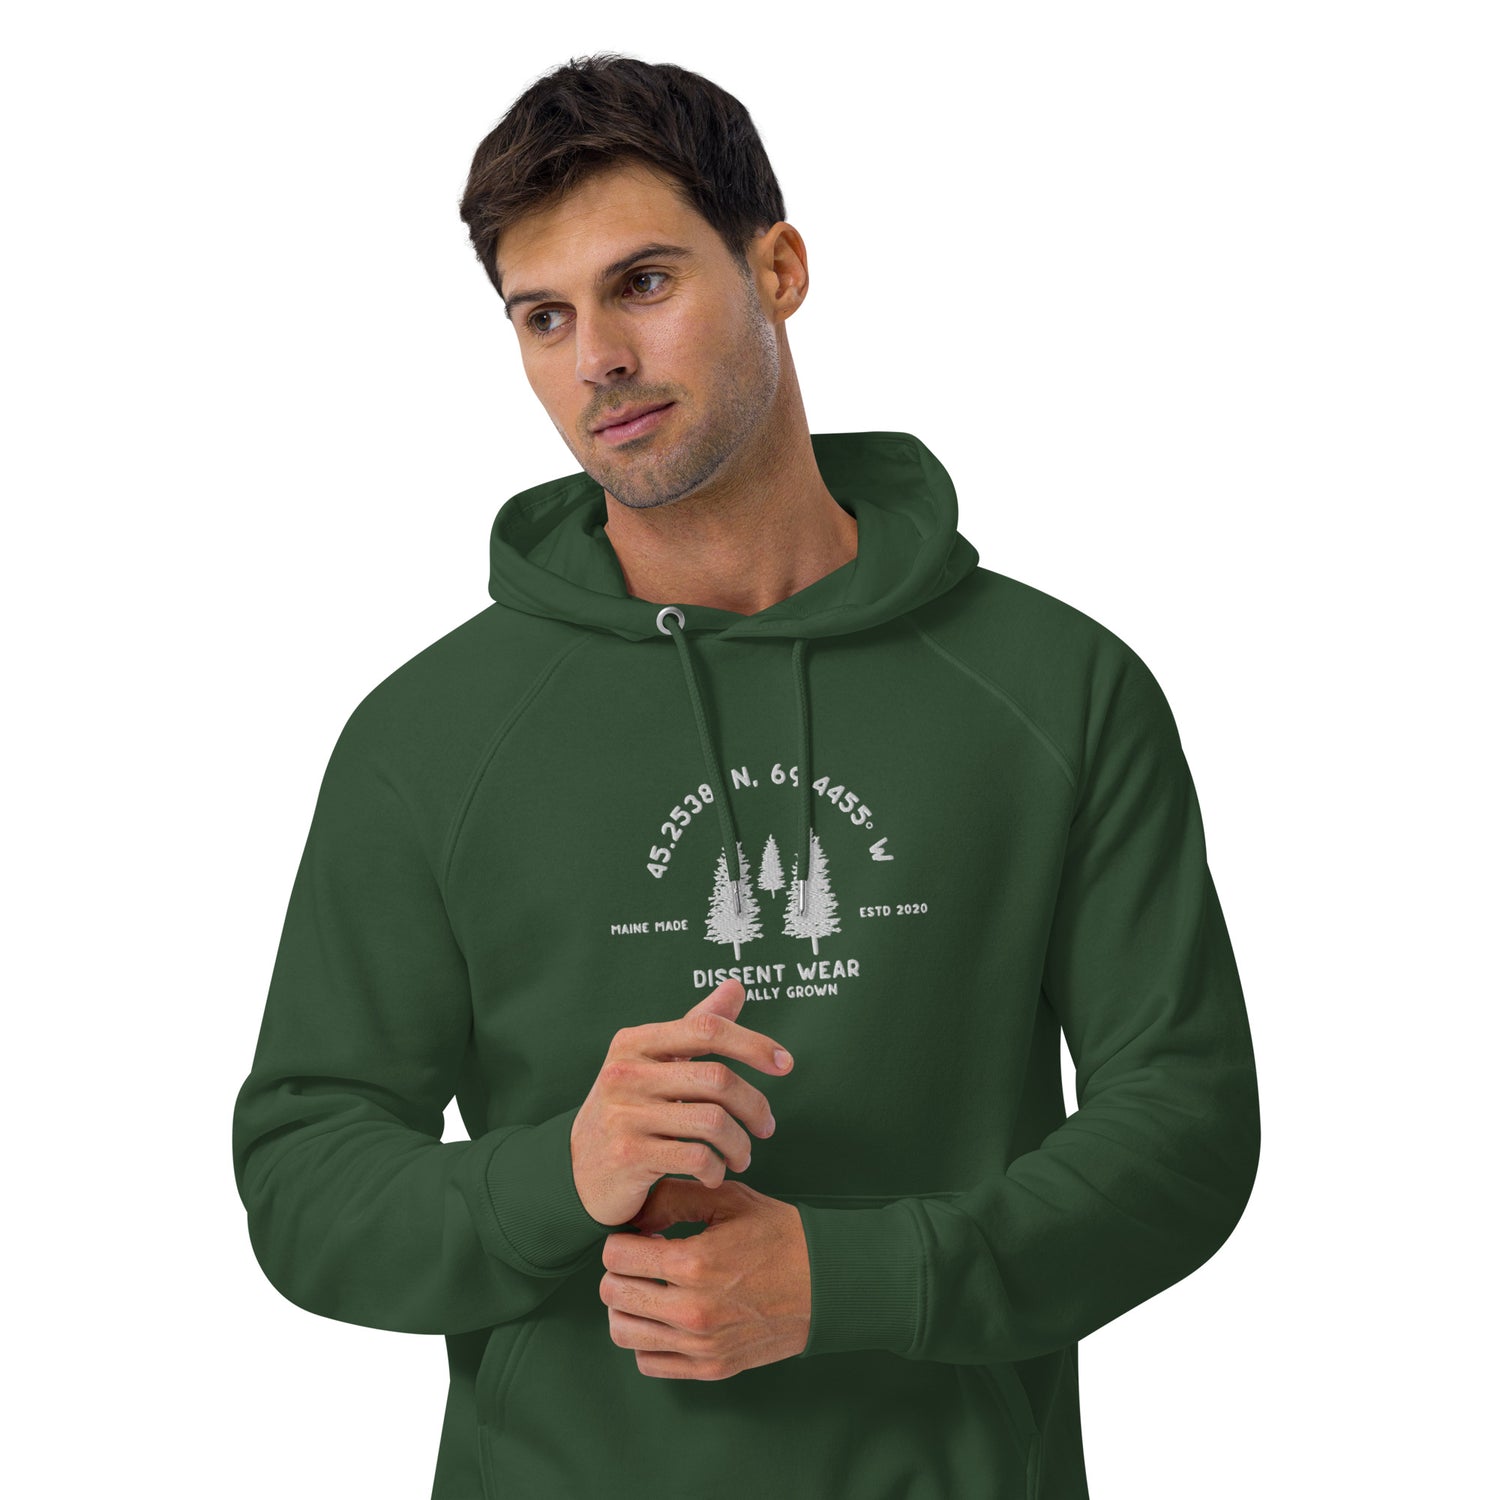 Maine Made Locally Grown 2023 embroidered eco raglan hoodie